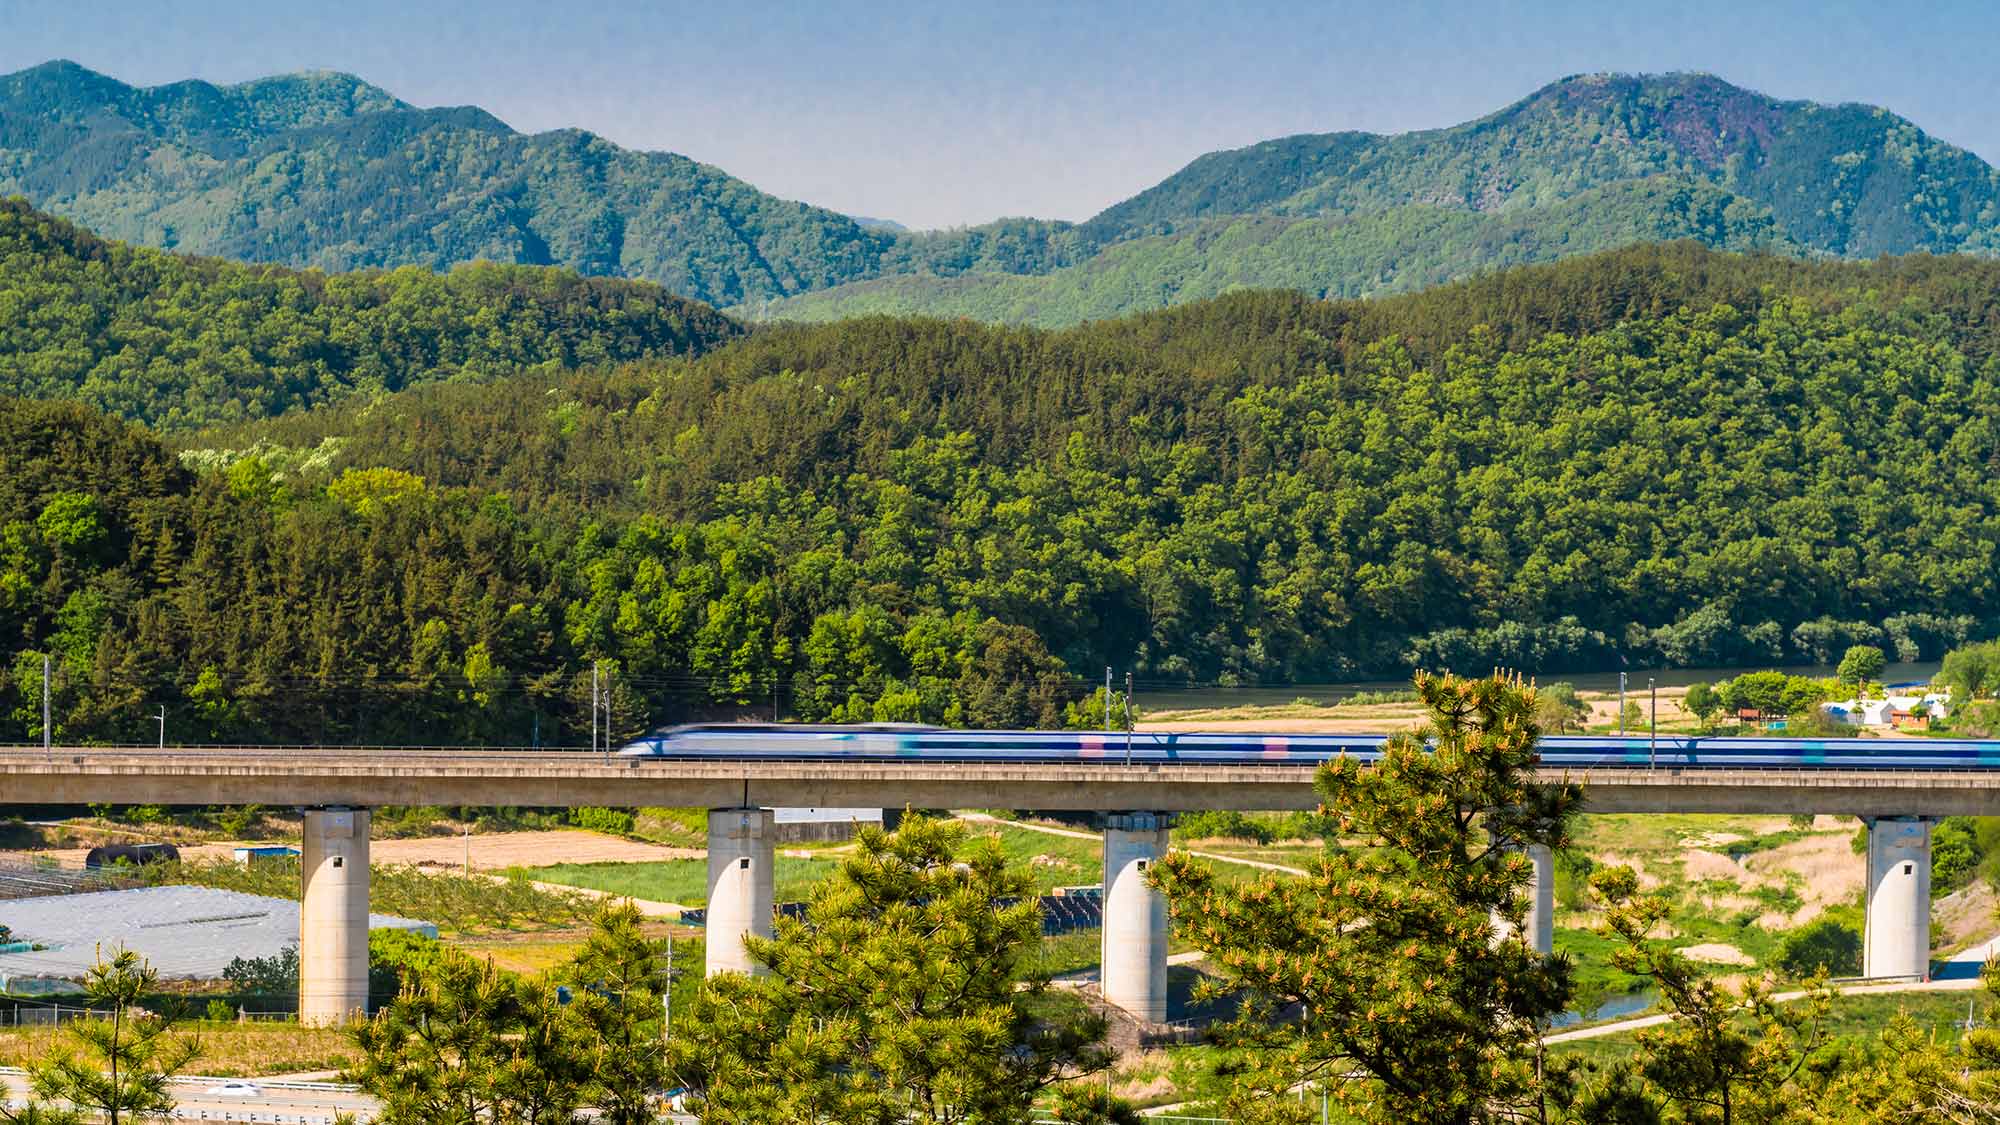 High speed train speeding across concrete railroad bridge in rural countryside